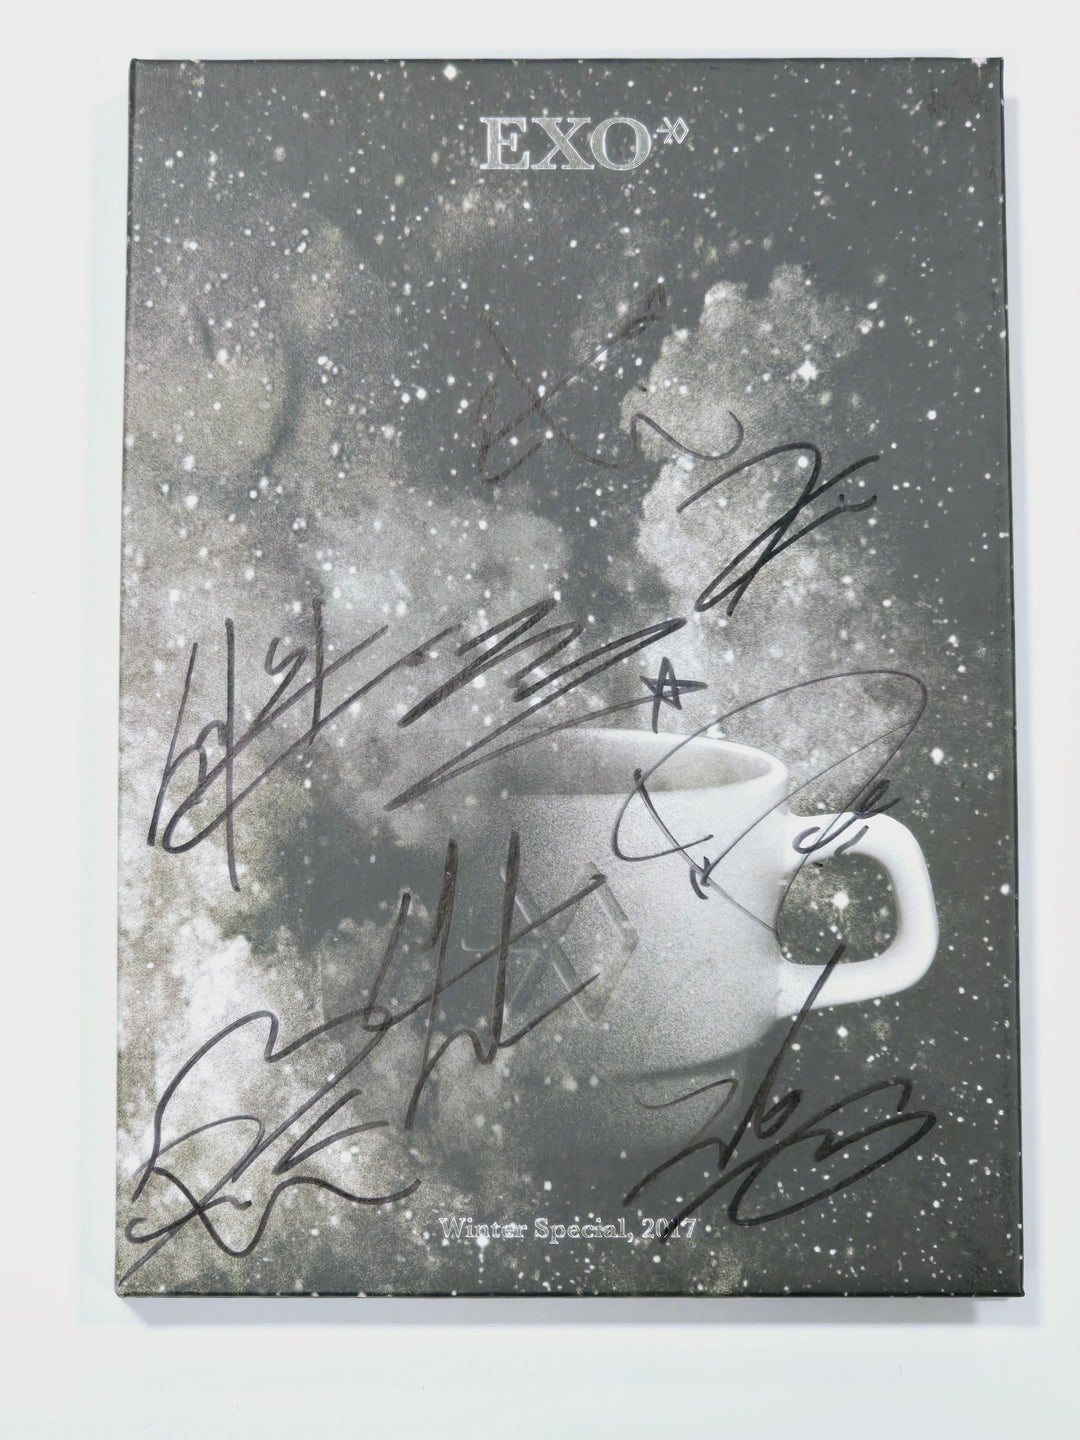 Exo, Kai (of Exo) - Hand Autographed(Signed) Promo Album [24.3.25]